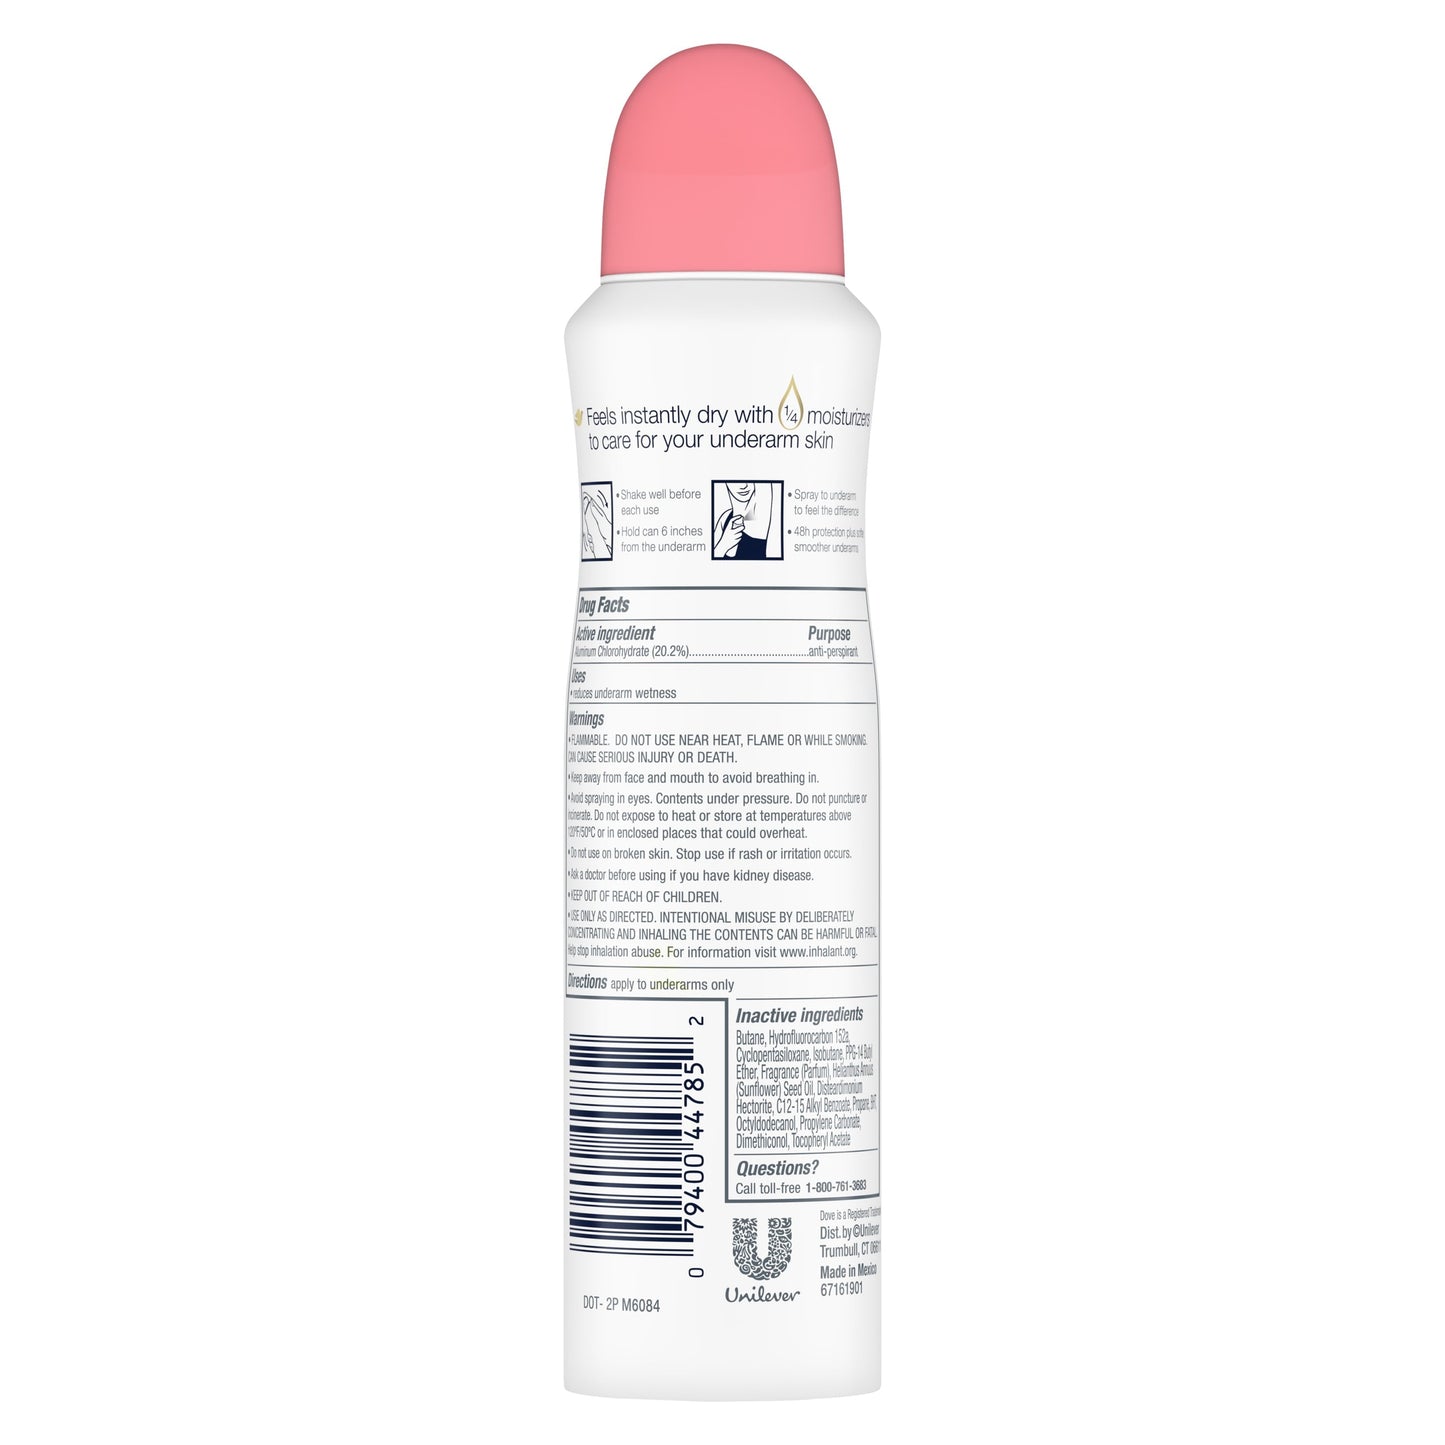 Dove Advanced Care Women's Antiperspirant Deodorant Dry Spray, Rose Petals, 3.8 oz